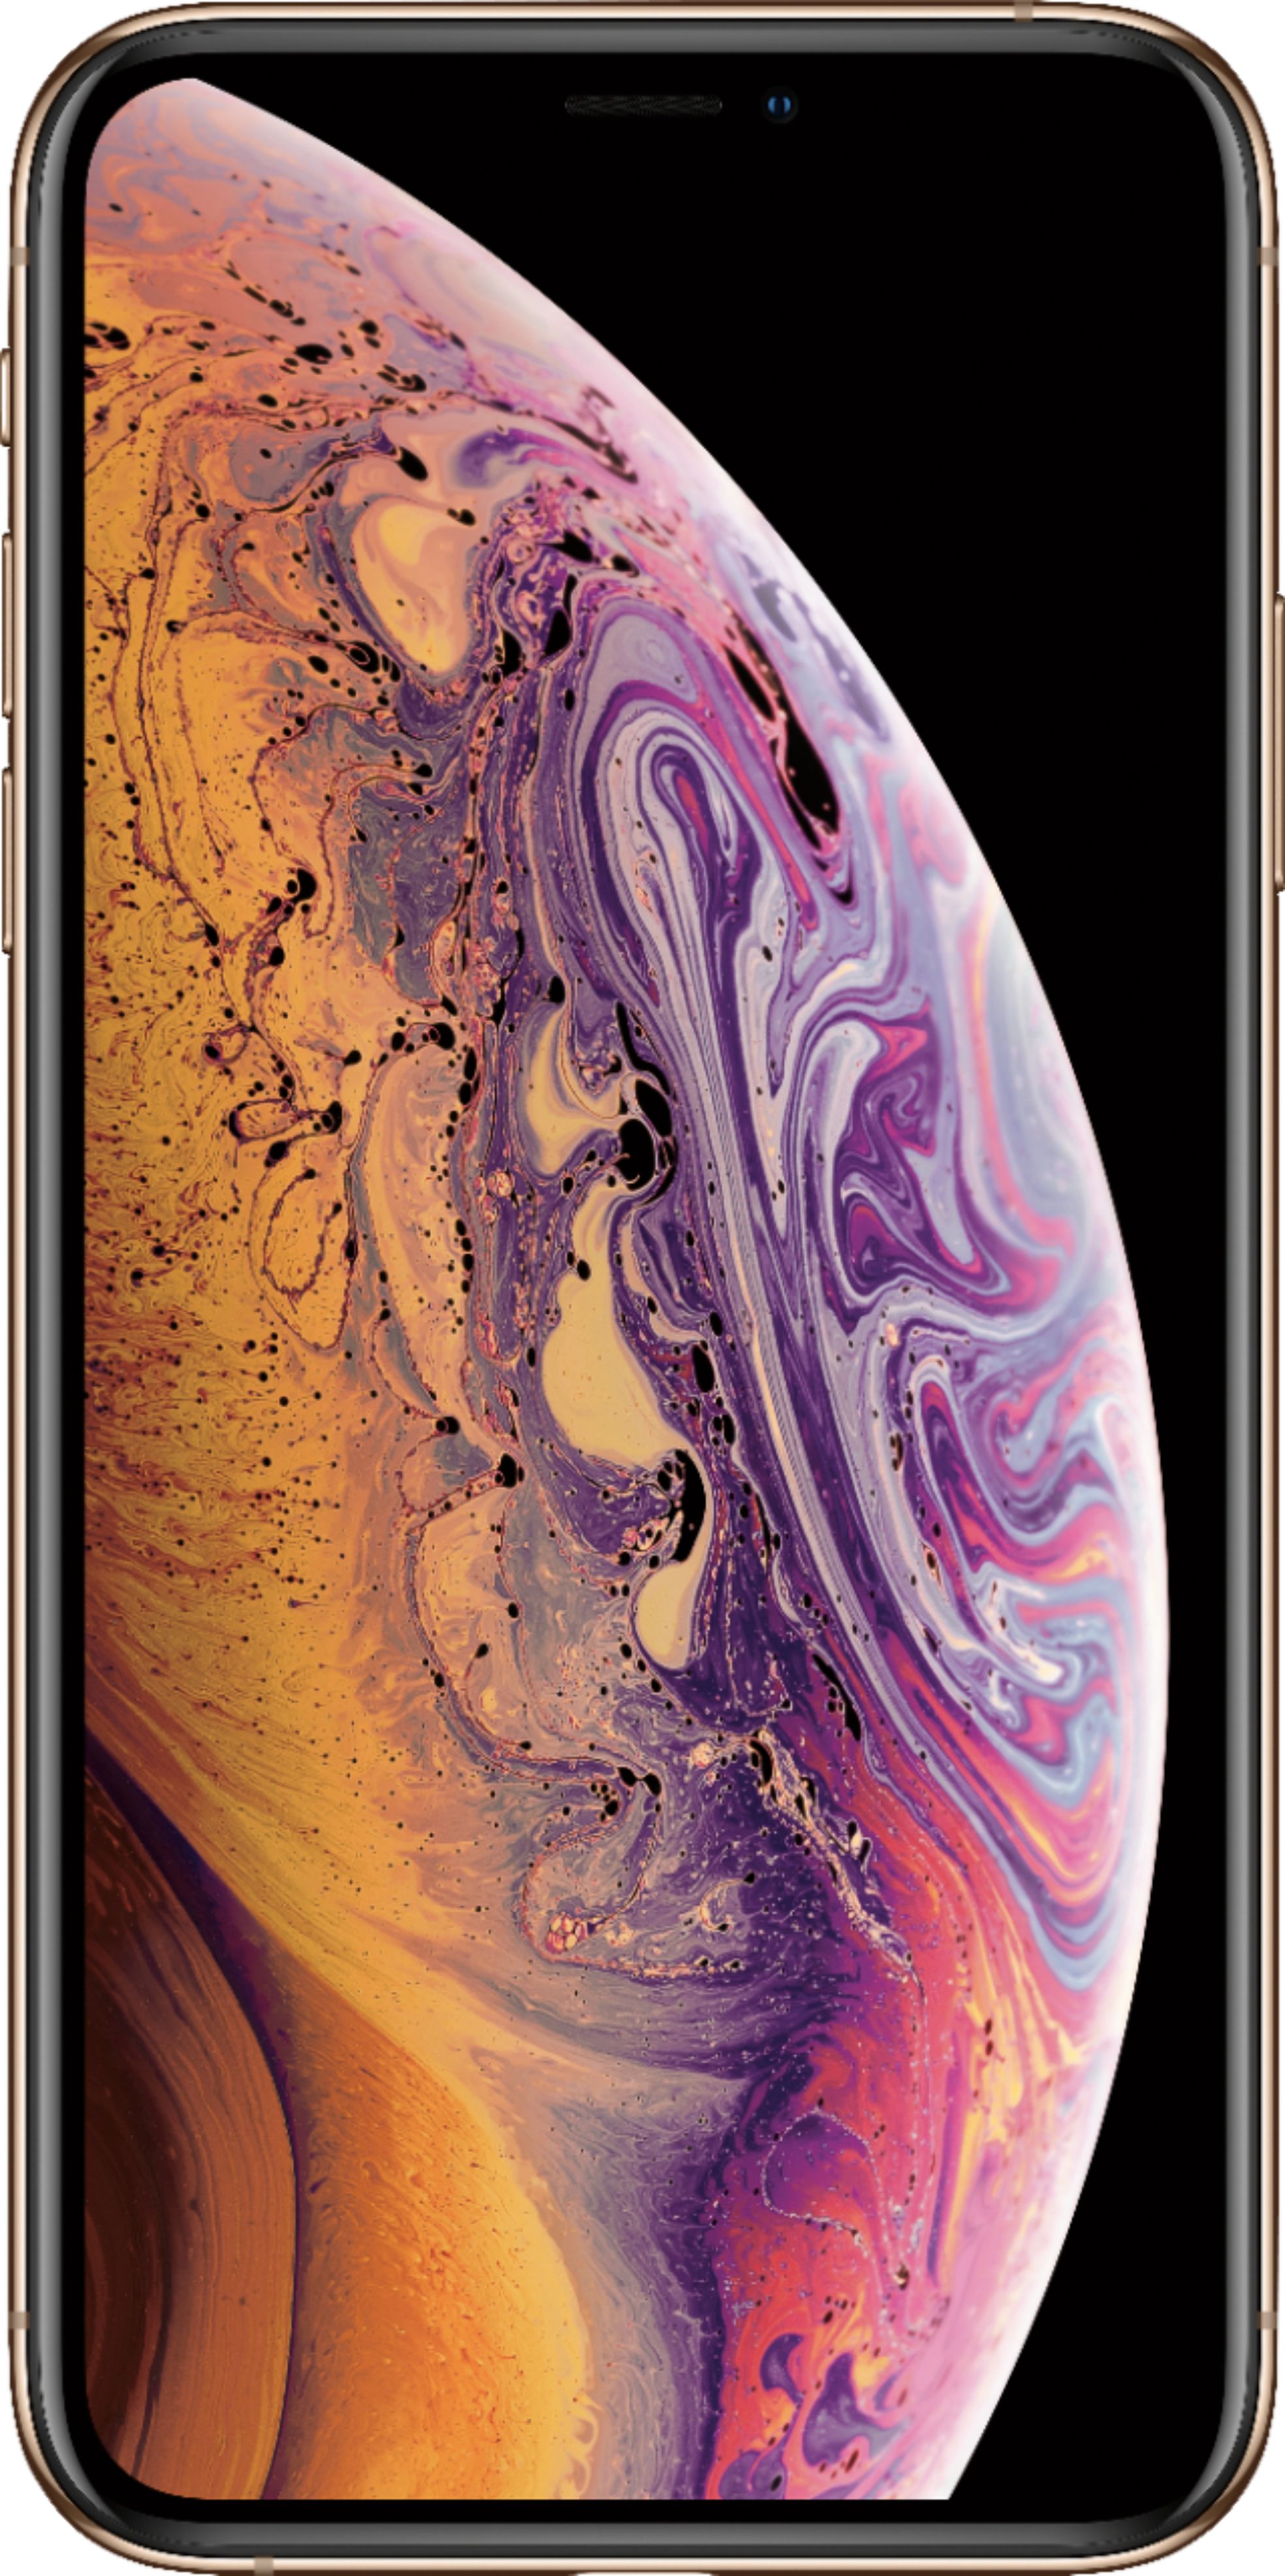 Best Buy: Apple iPhone XS 256GB Gold (Verizon) MT992LL/A